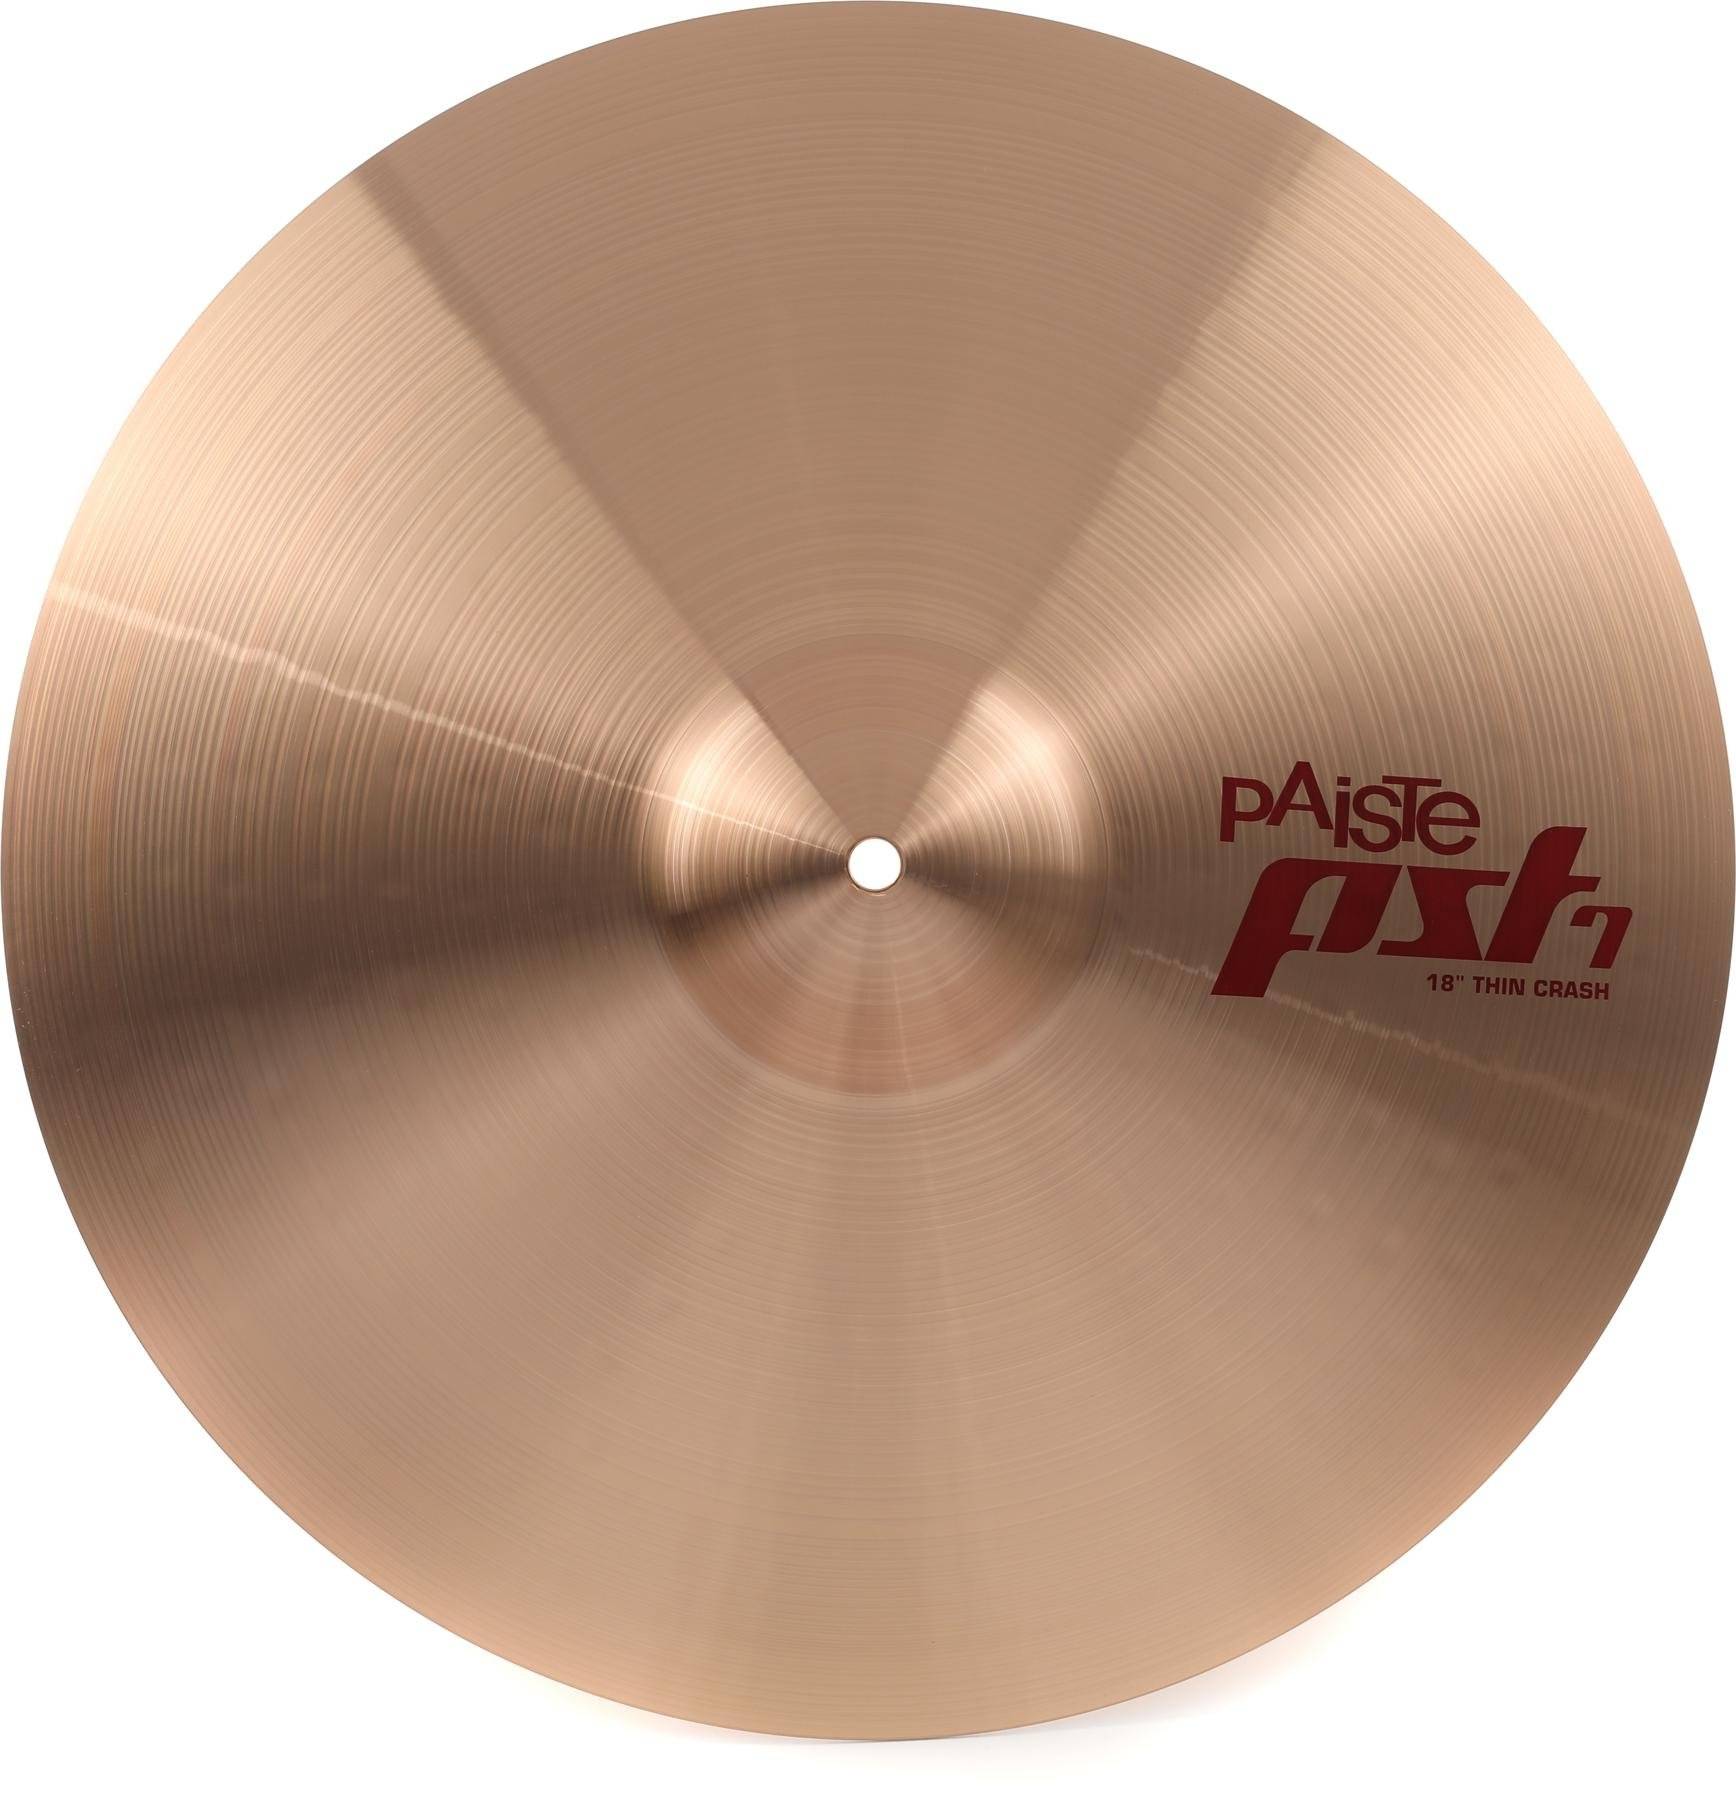 PAISTE PST 7 18" Thin Crash Cymbal